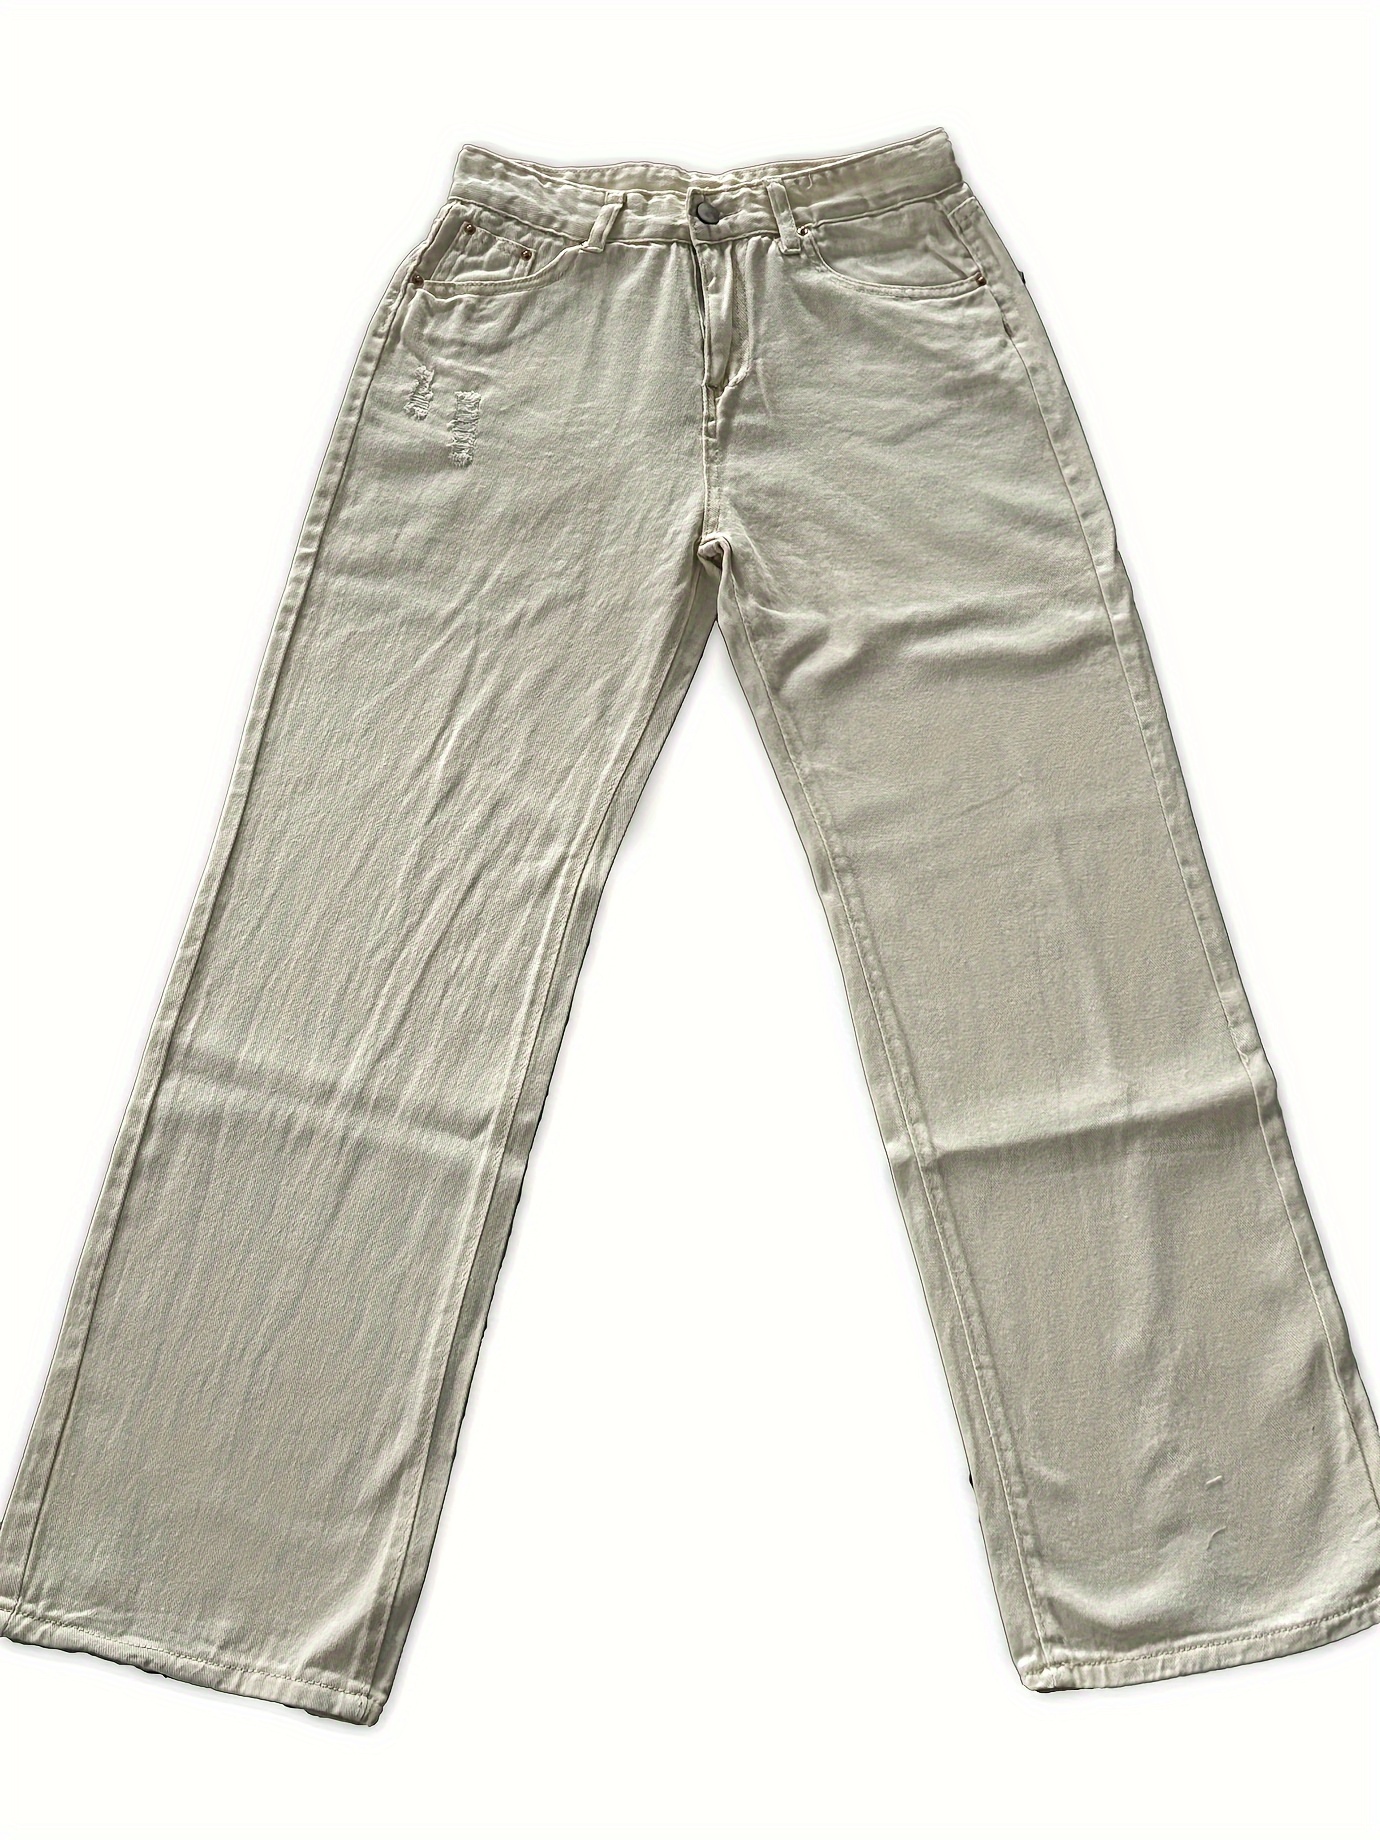 Dress Pants Women Corduroy High Waisted Baggy Pants Vintage y2k